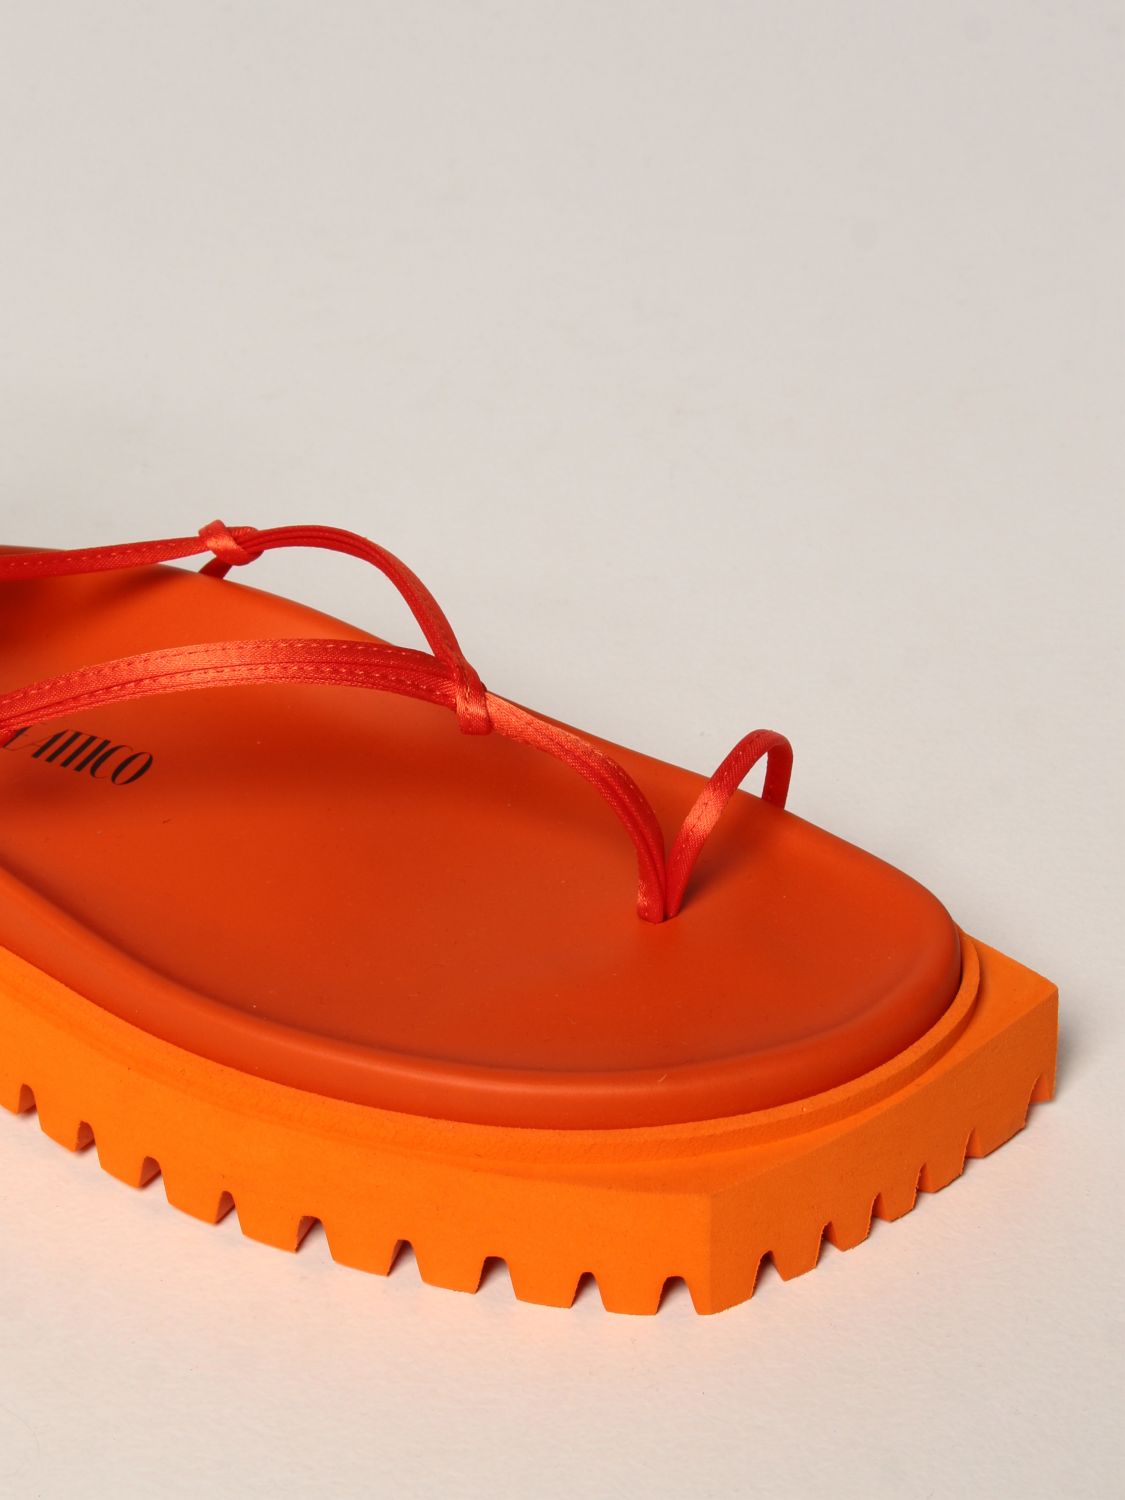 Sandales plates The Attico: Chaussures femme The Attico orange 4